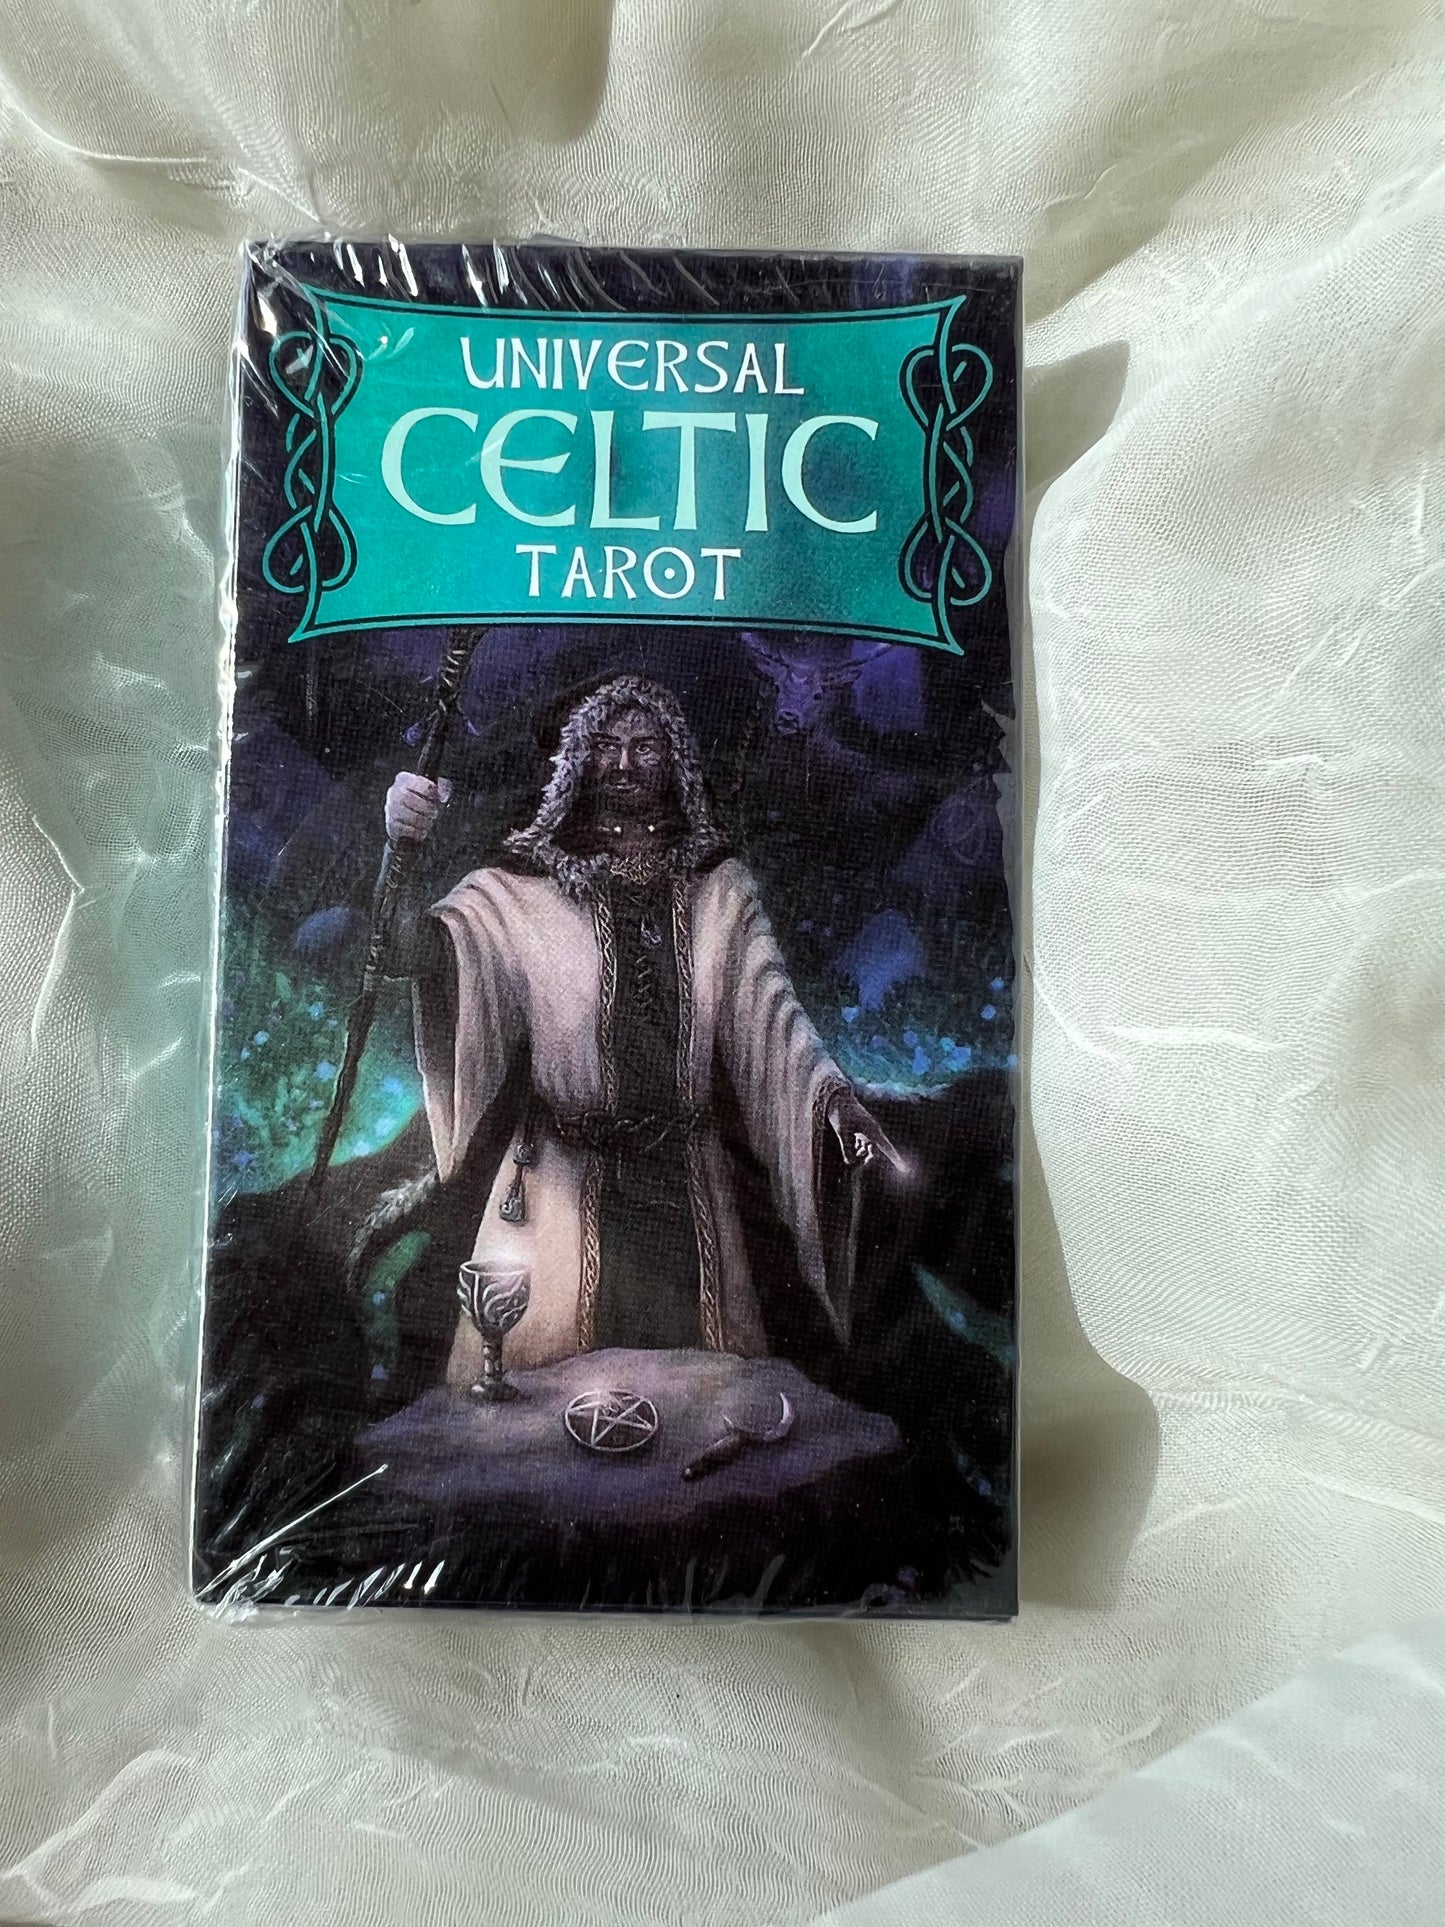 Universal Celtic Tarot cards